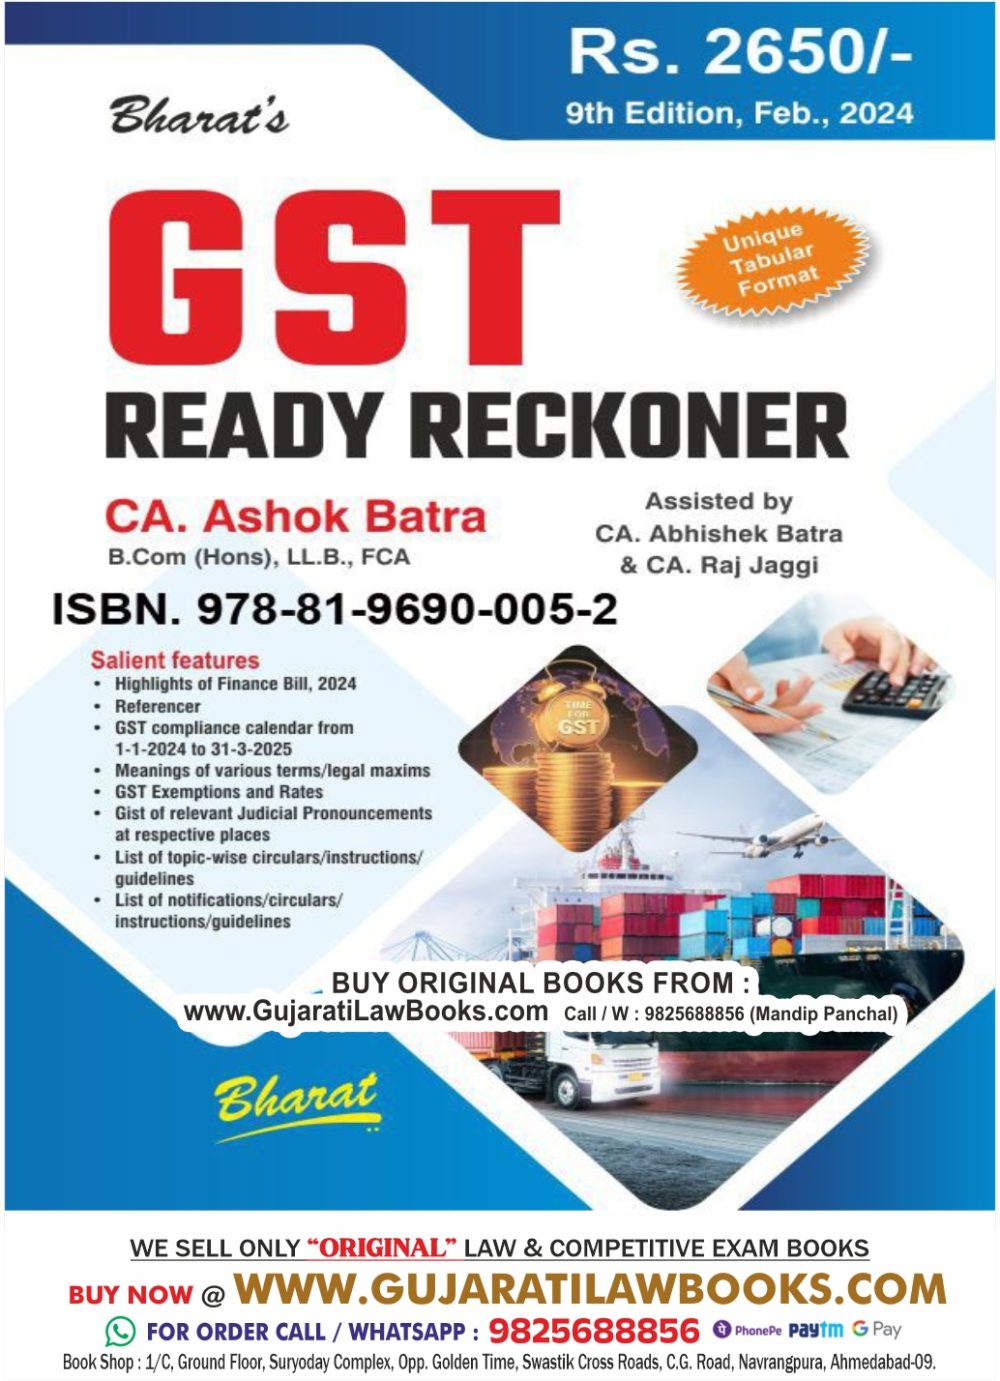 Bharat's GST Ready Reckoner by CA Ashok Batra - Latest 9th Edition February 2024